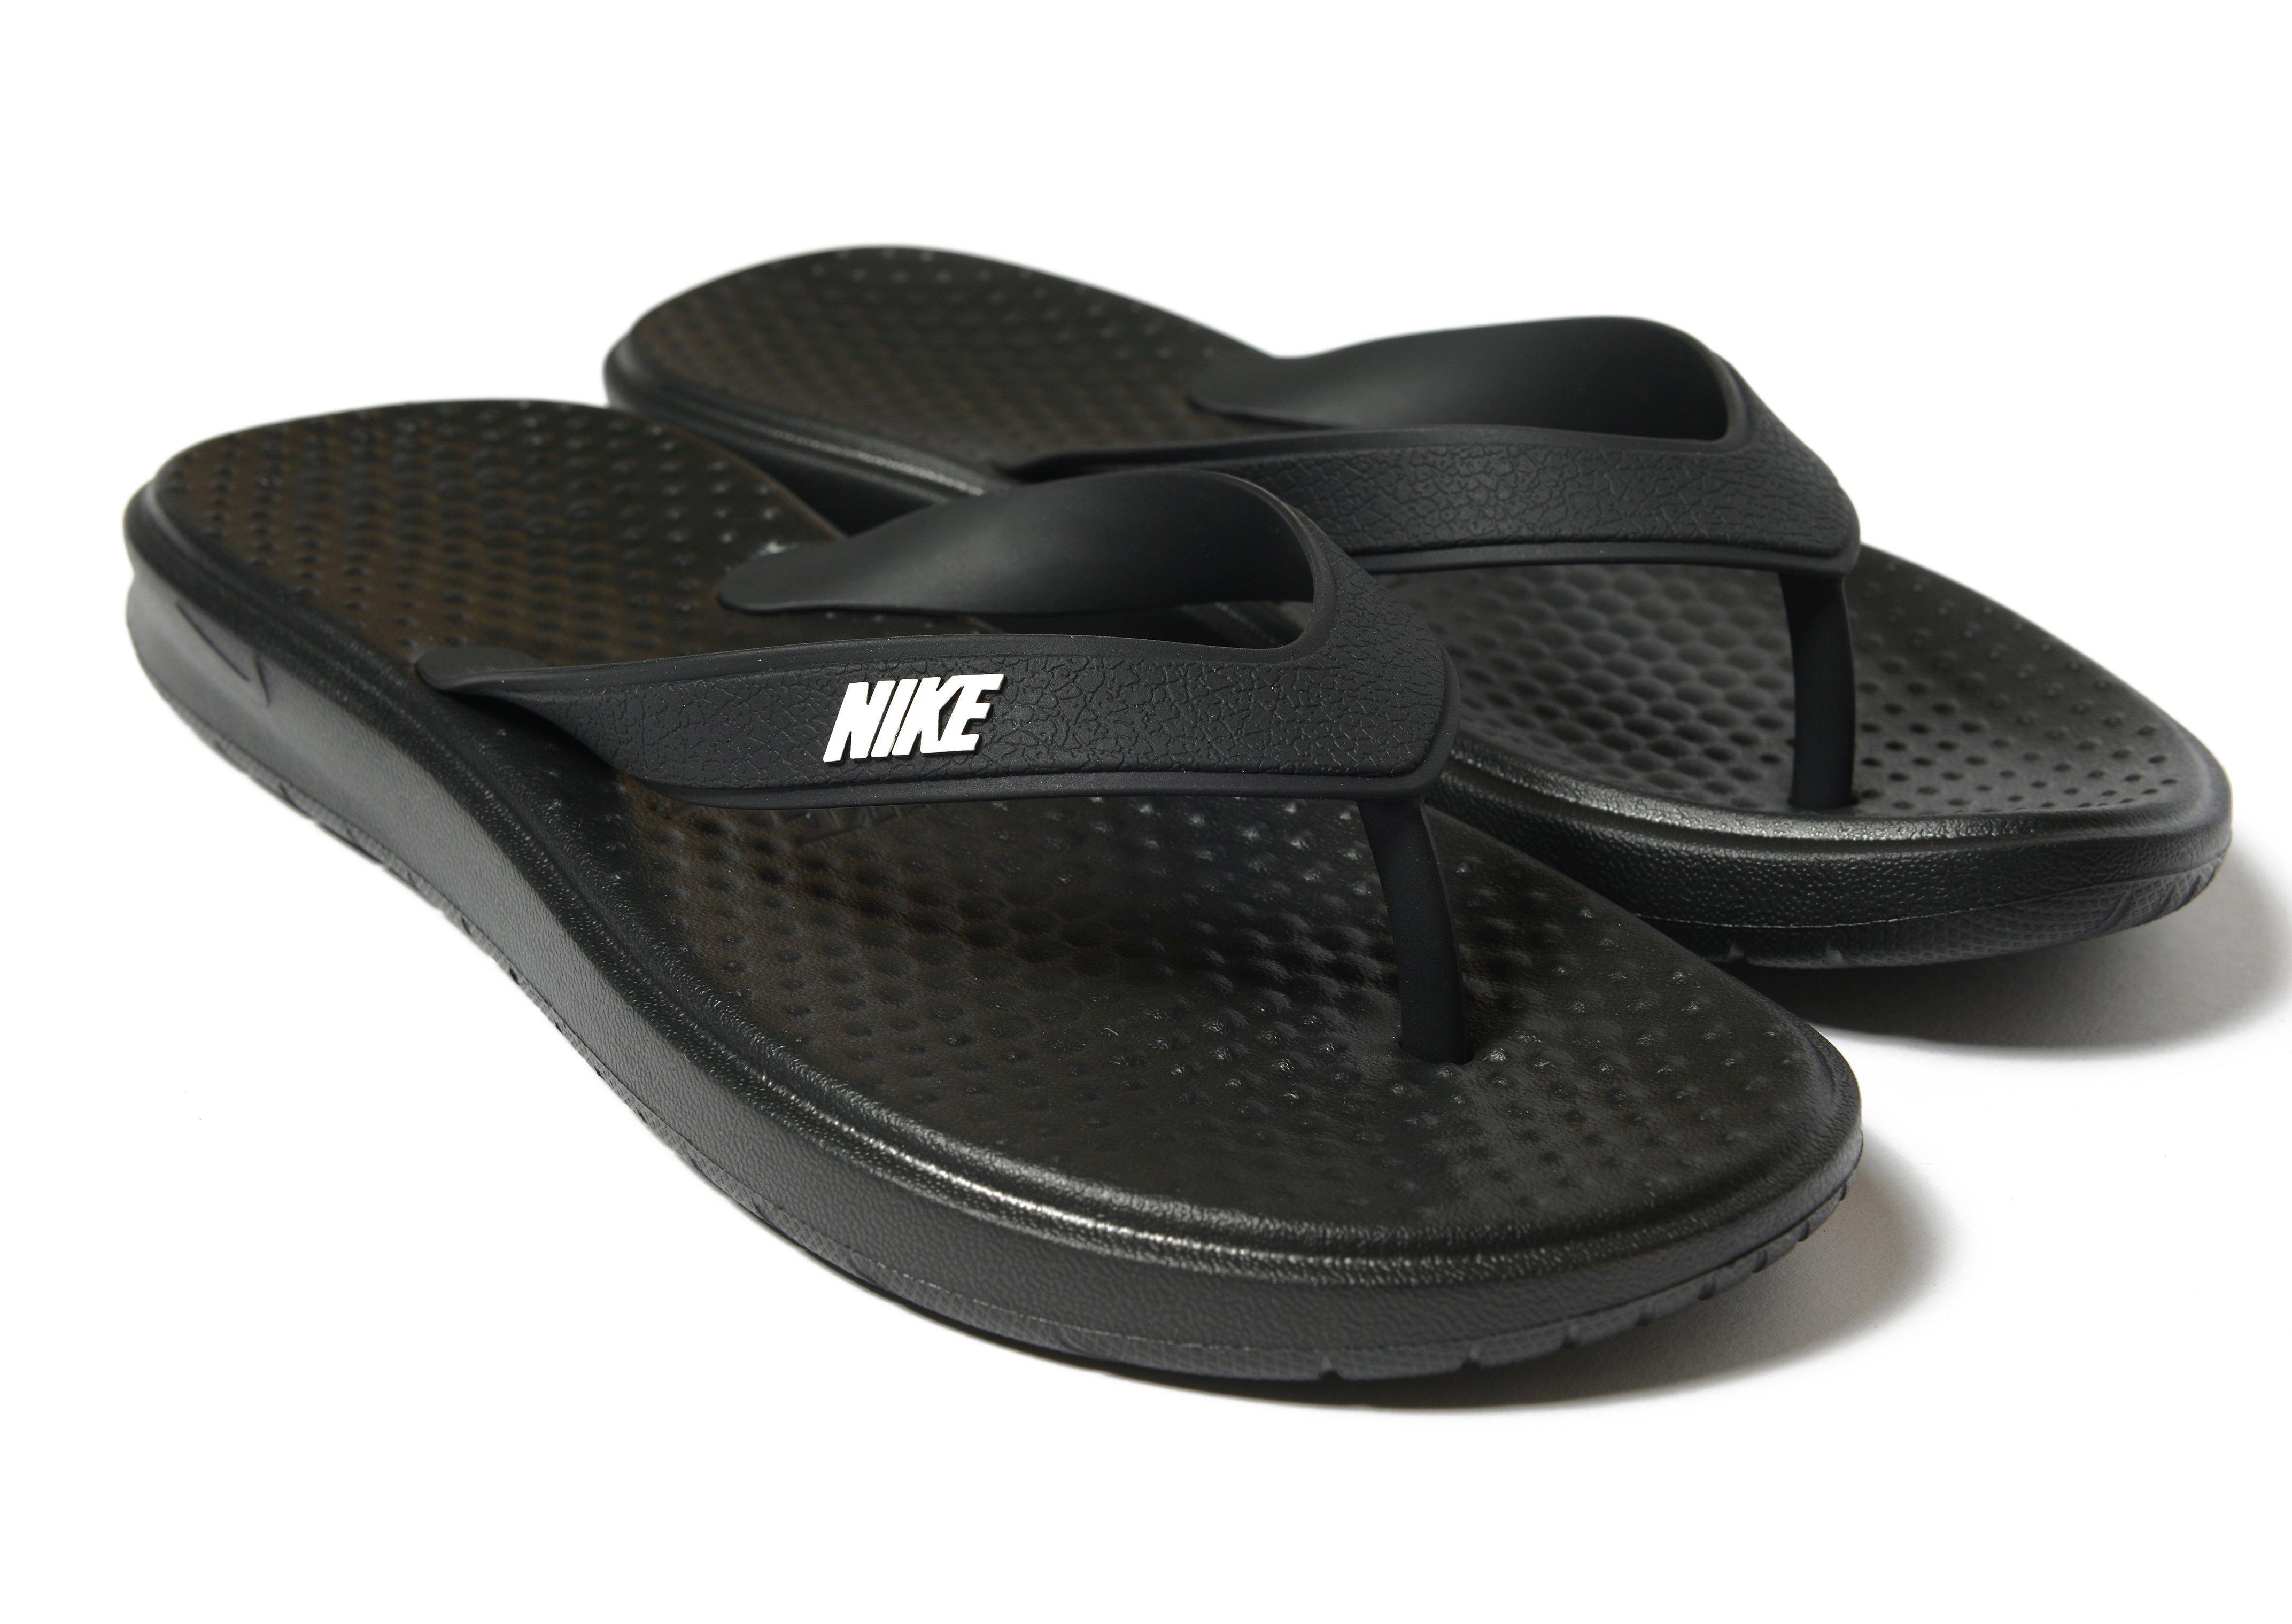 Lyst - Nike Solay Flip Flops in Black for Men